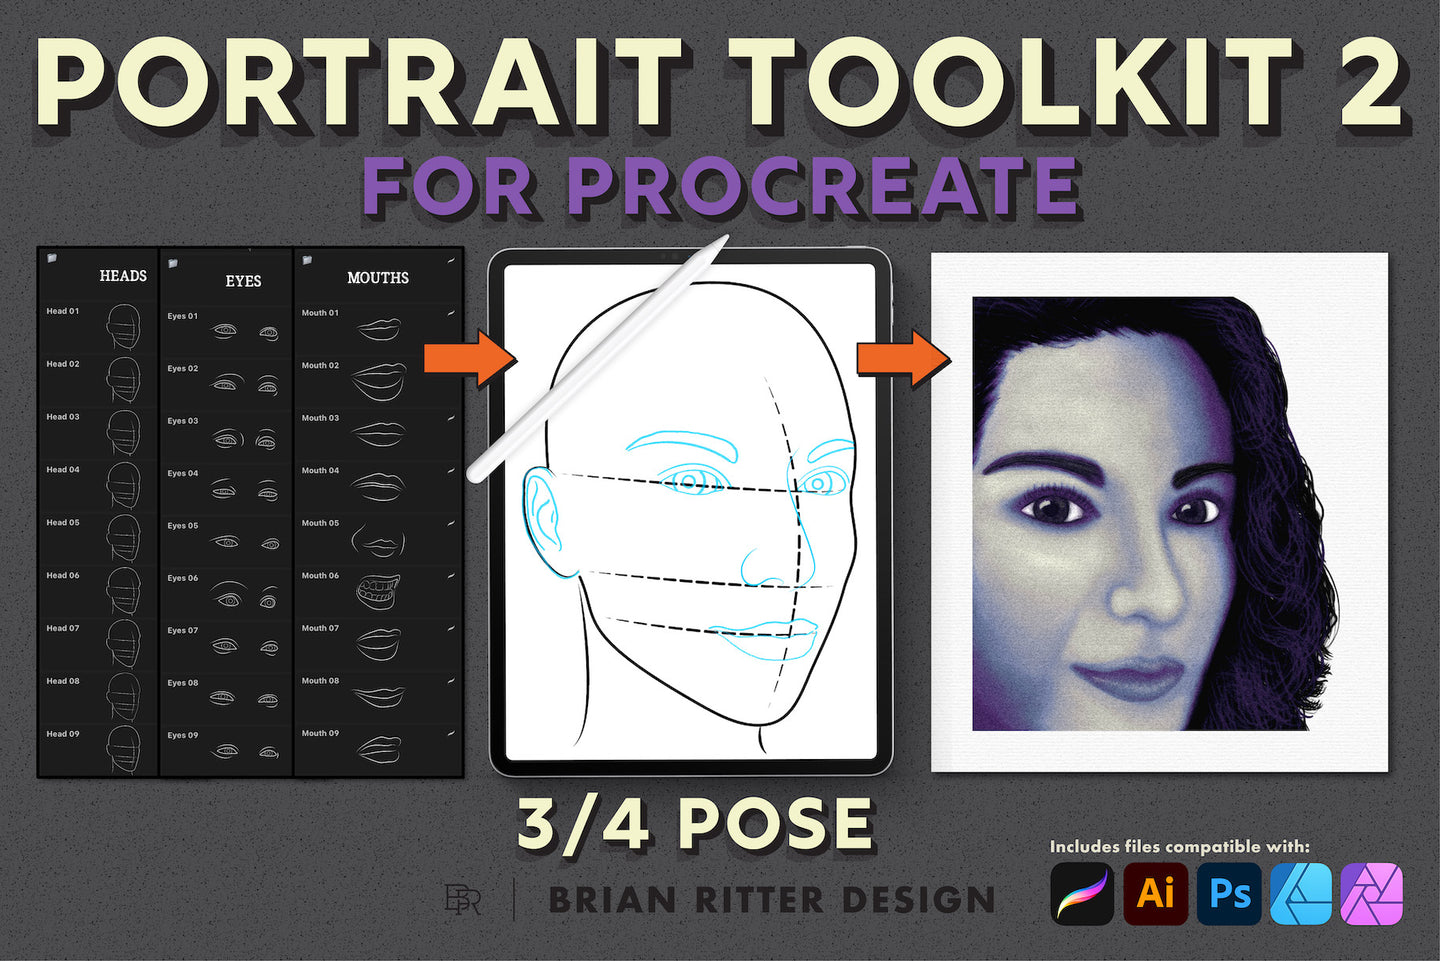 Portrait Toolkit 2 for Procreate - Brian Ritter Design